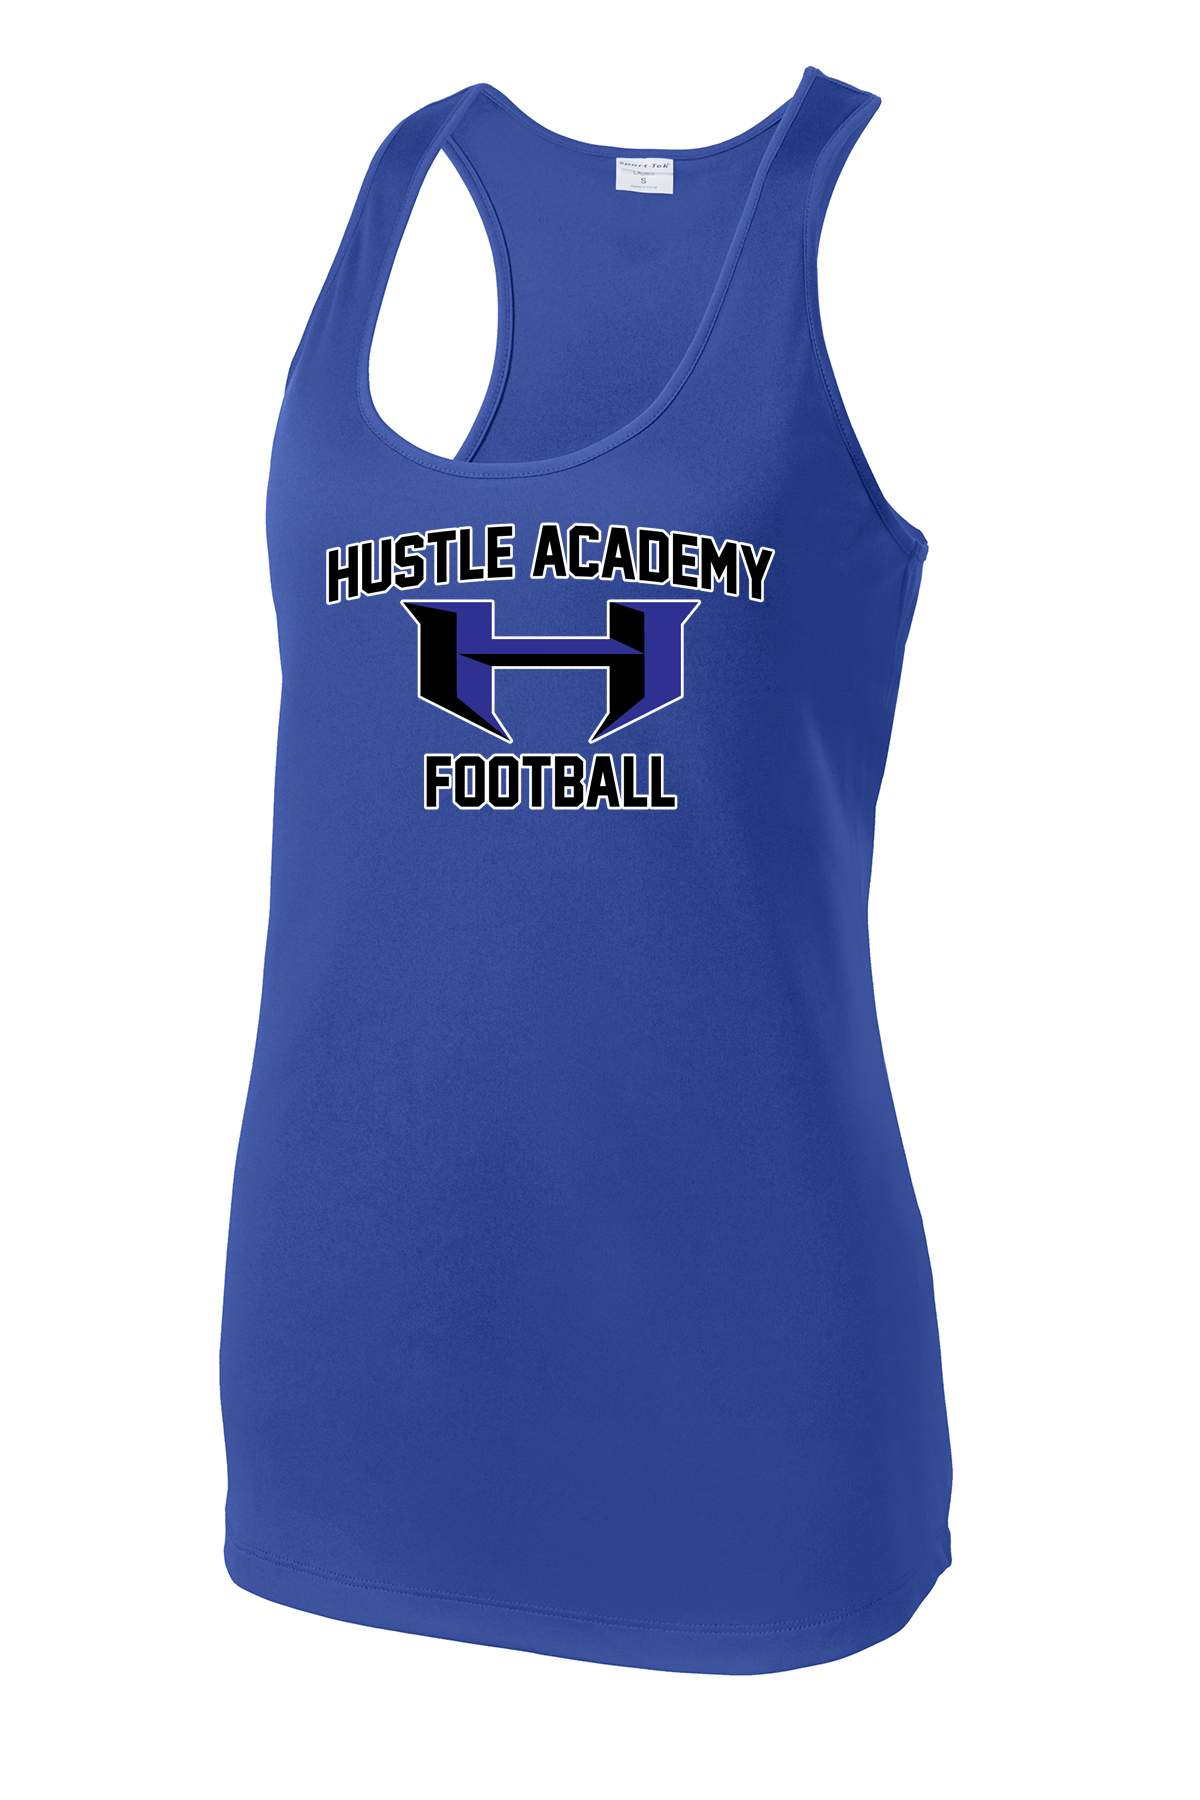 Hustle Academy Football Women's Racerback Tank